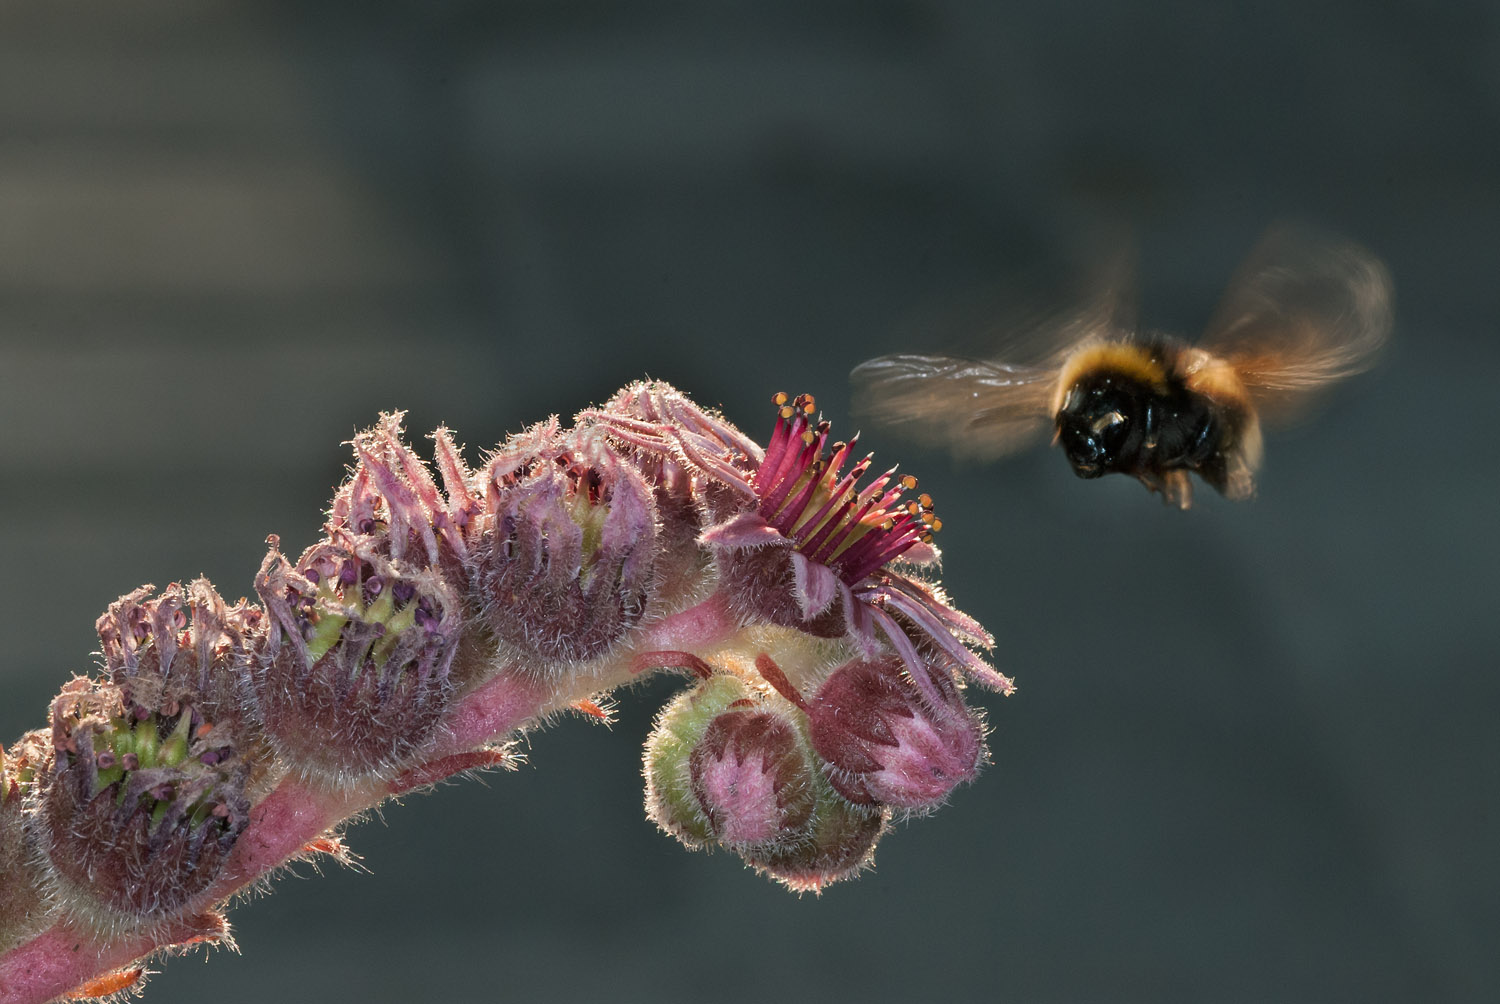 Bumblebee in flight towards an Houseleek